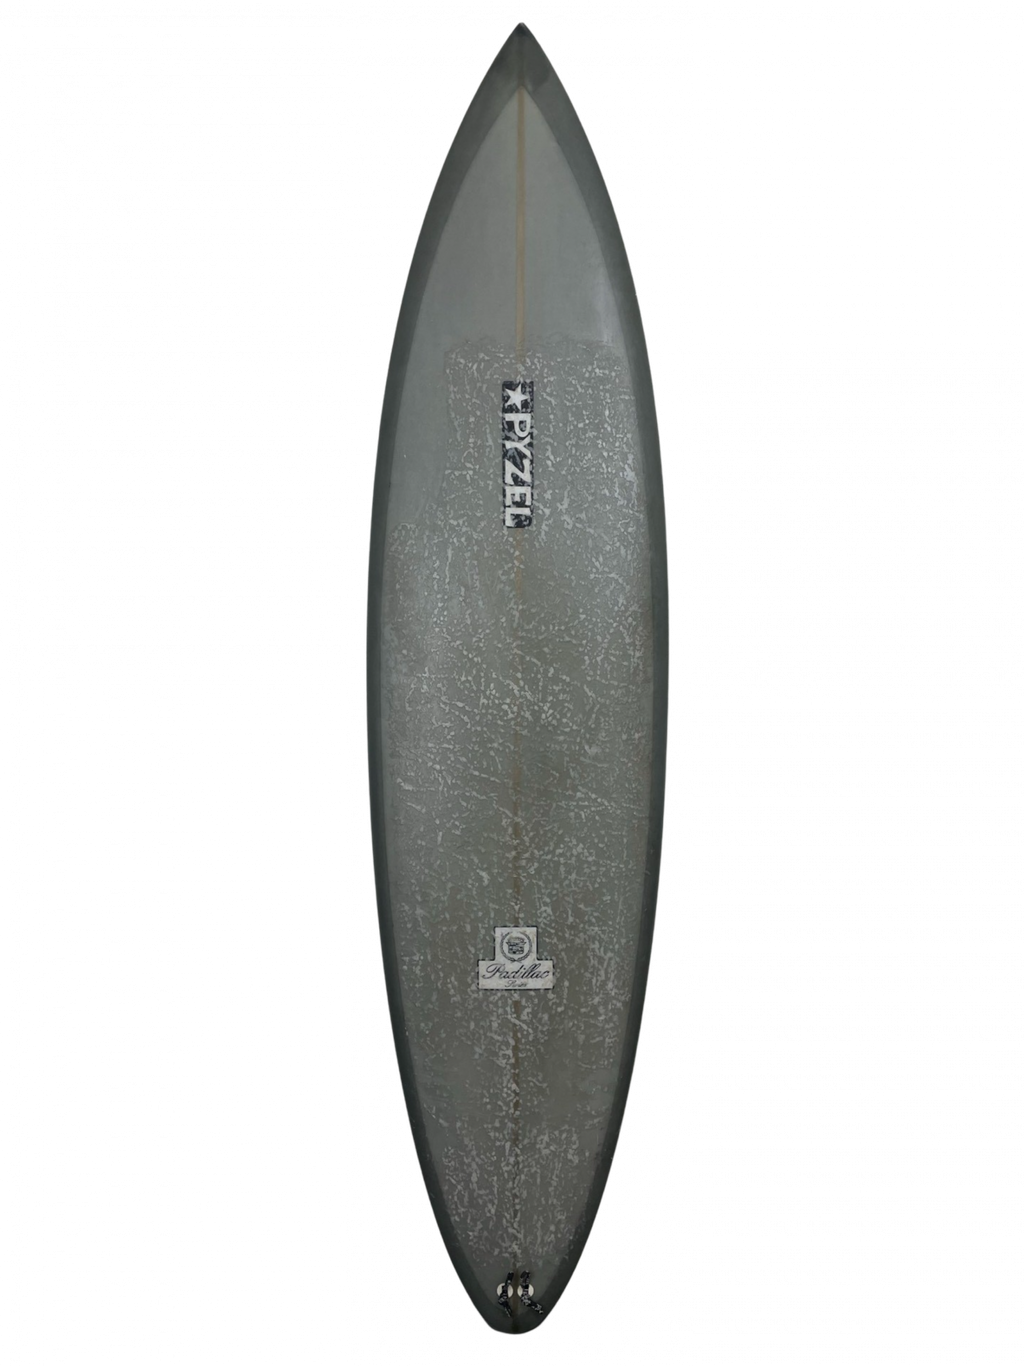 www.pyzelsurfboards.com